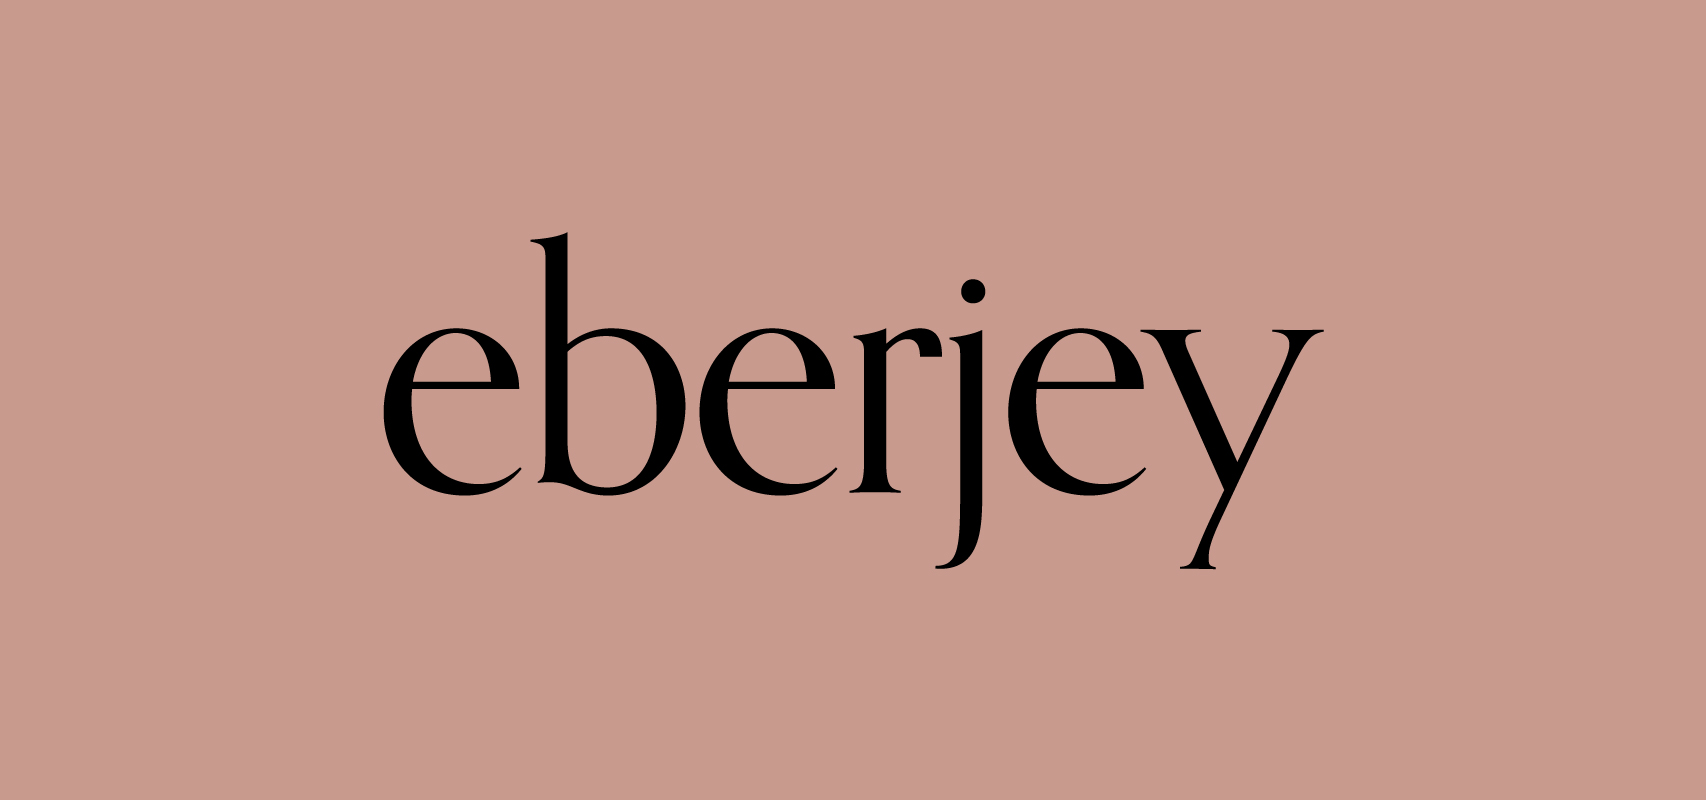 Eberjey_CaseStudy_01